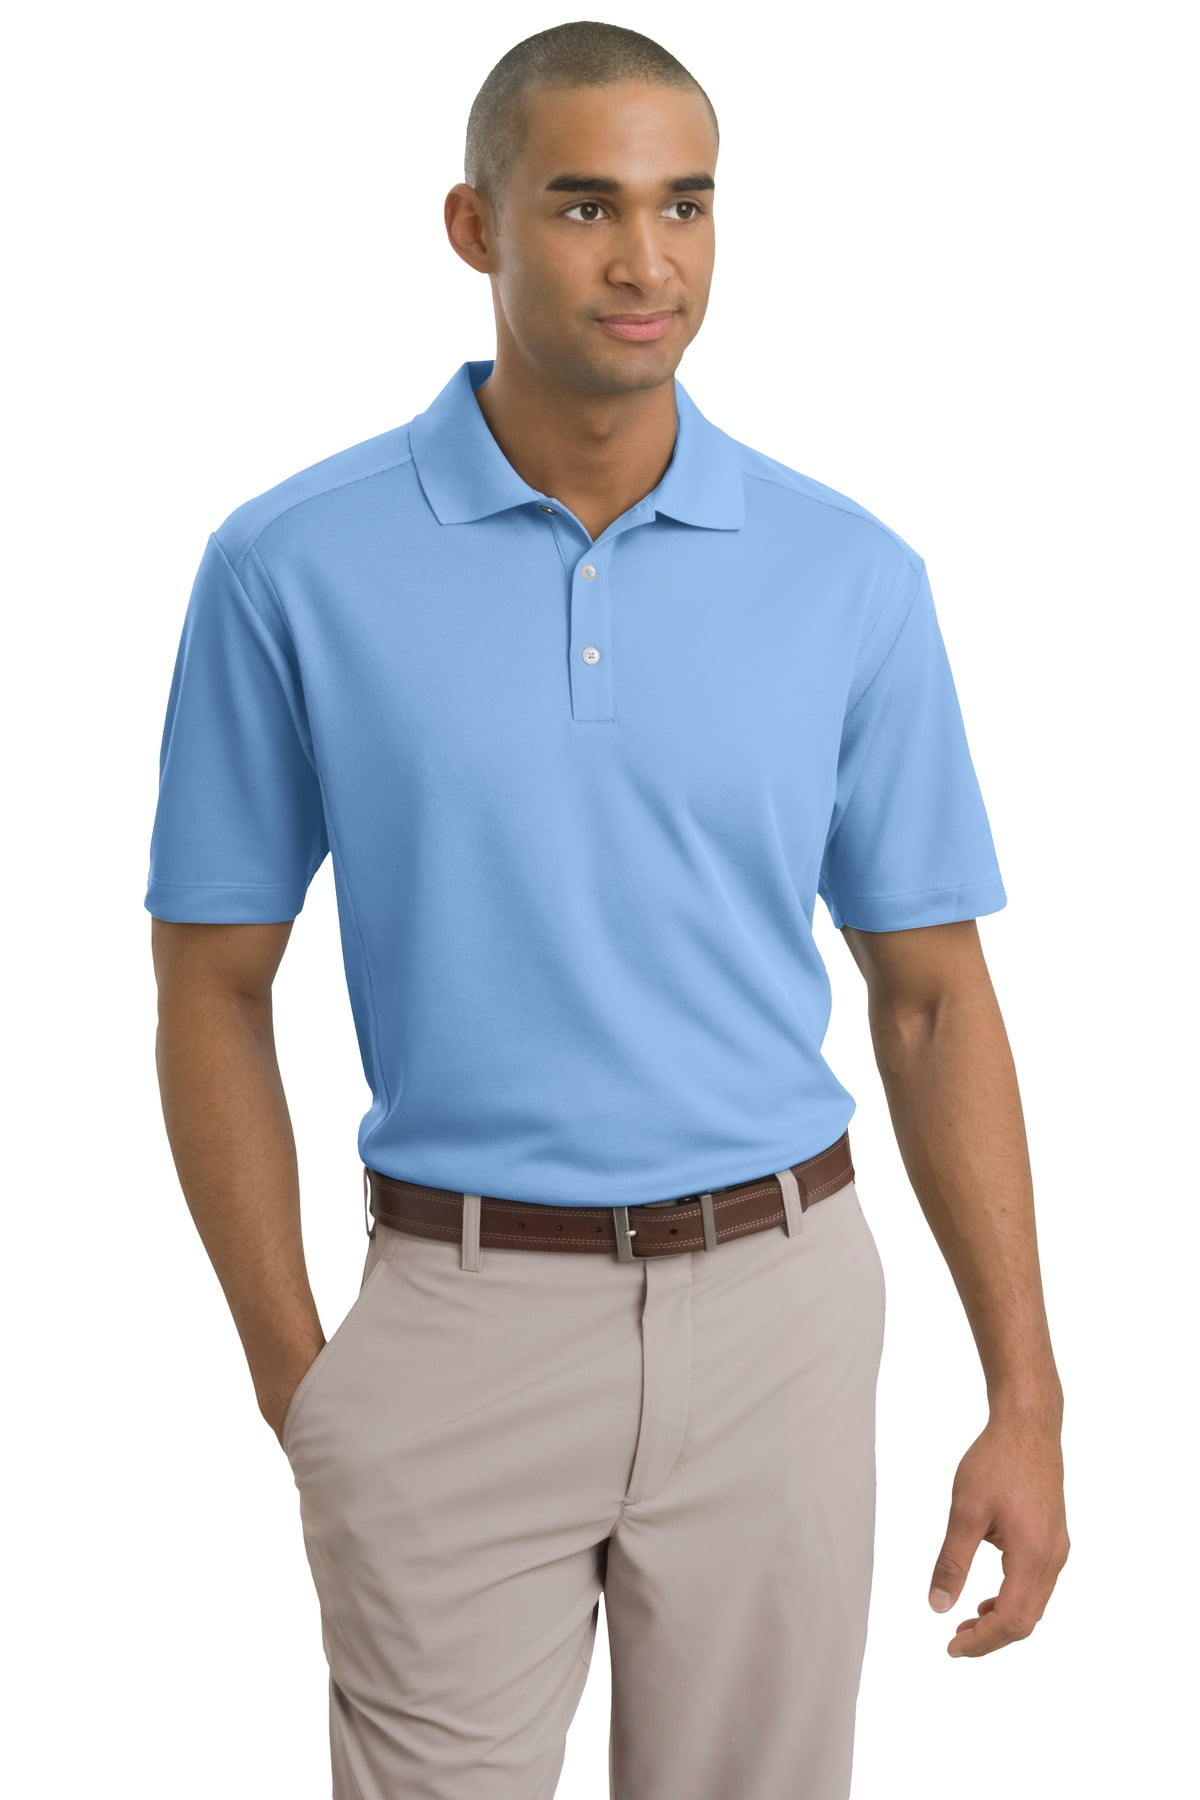 Nike Golf - Dri-FIT Classic Polo, Style 267020 - Walmart.com